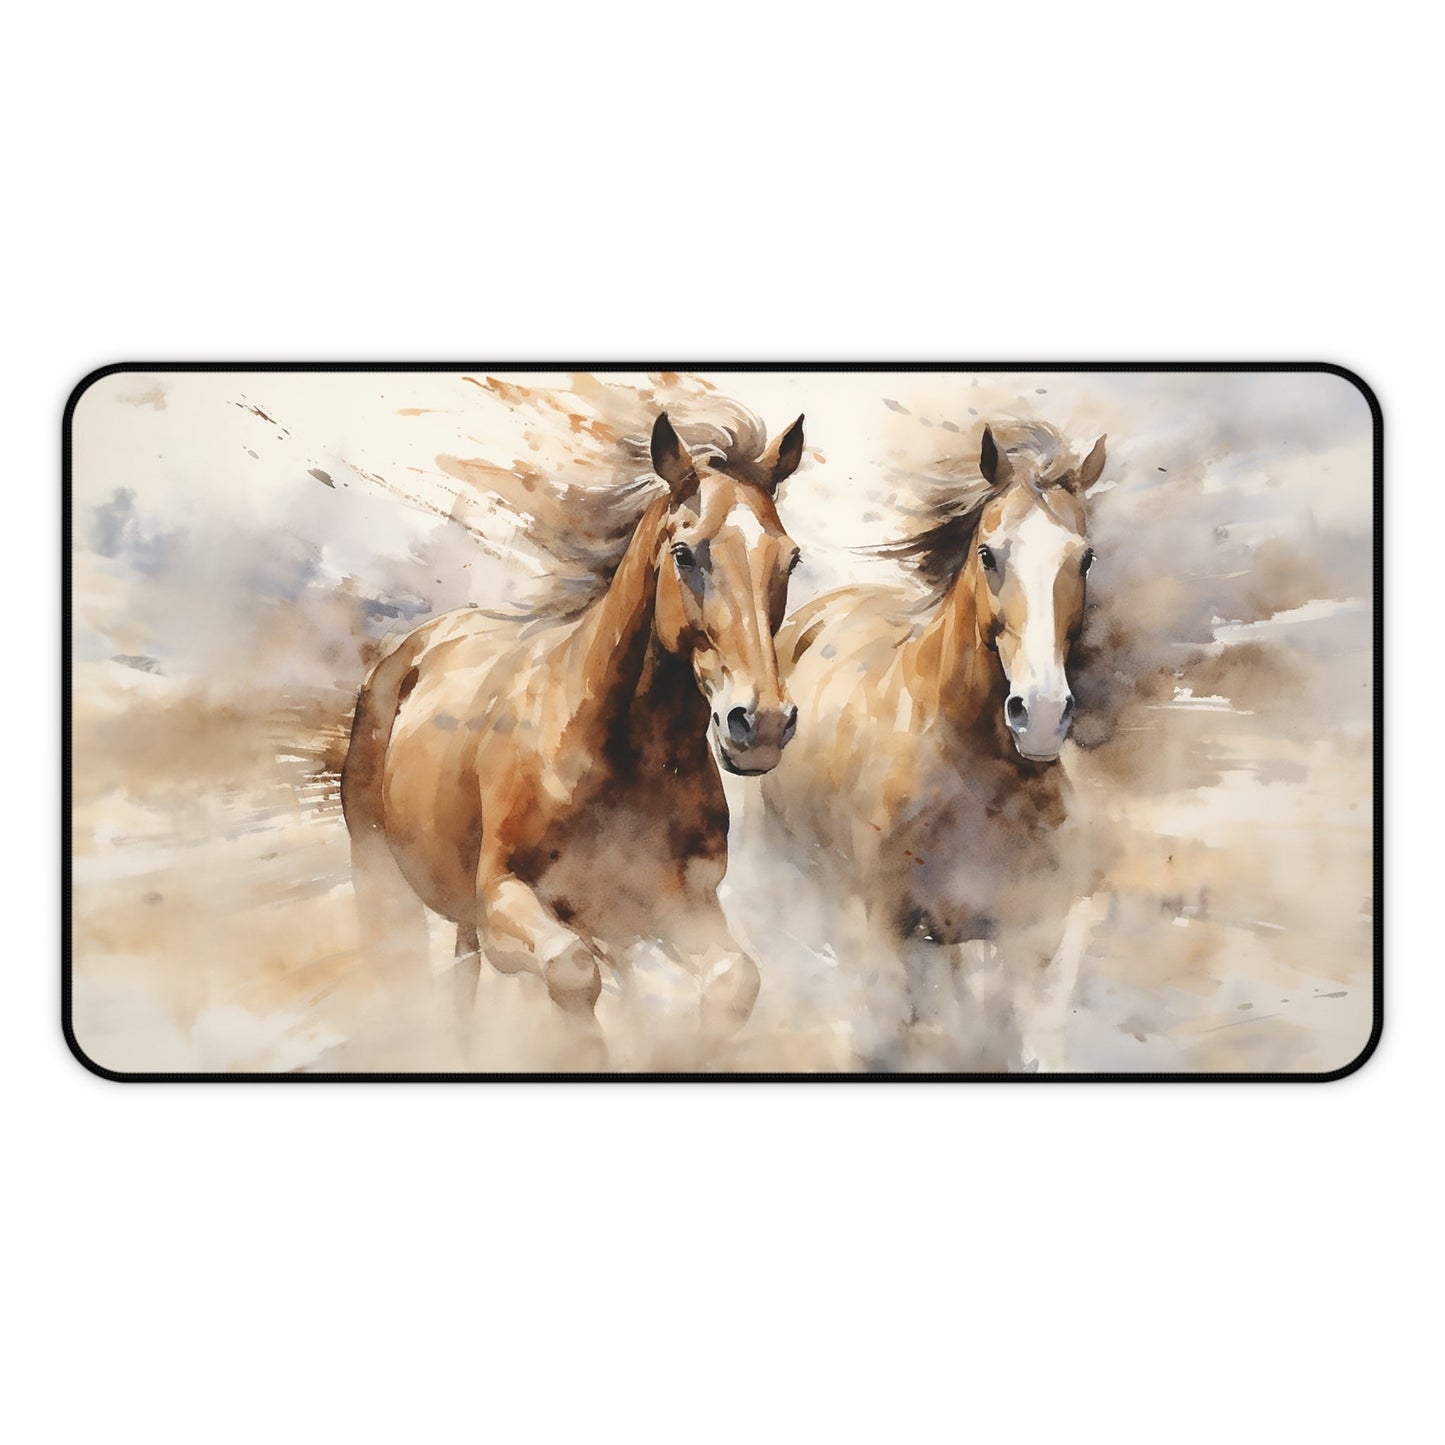 Desk Mat, Wild Horse in a Beautiful Watercolor XL Desk Mat - Galloping Mustang Horses MousePad, Horse Lover, Horse Person Gift,Trainer Gift - FlooredByArt